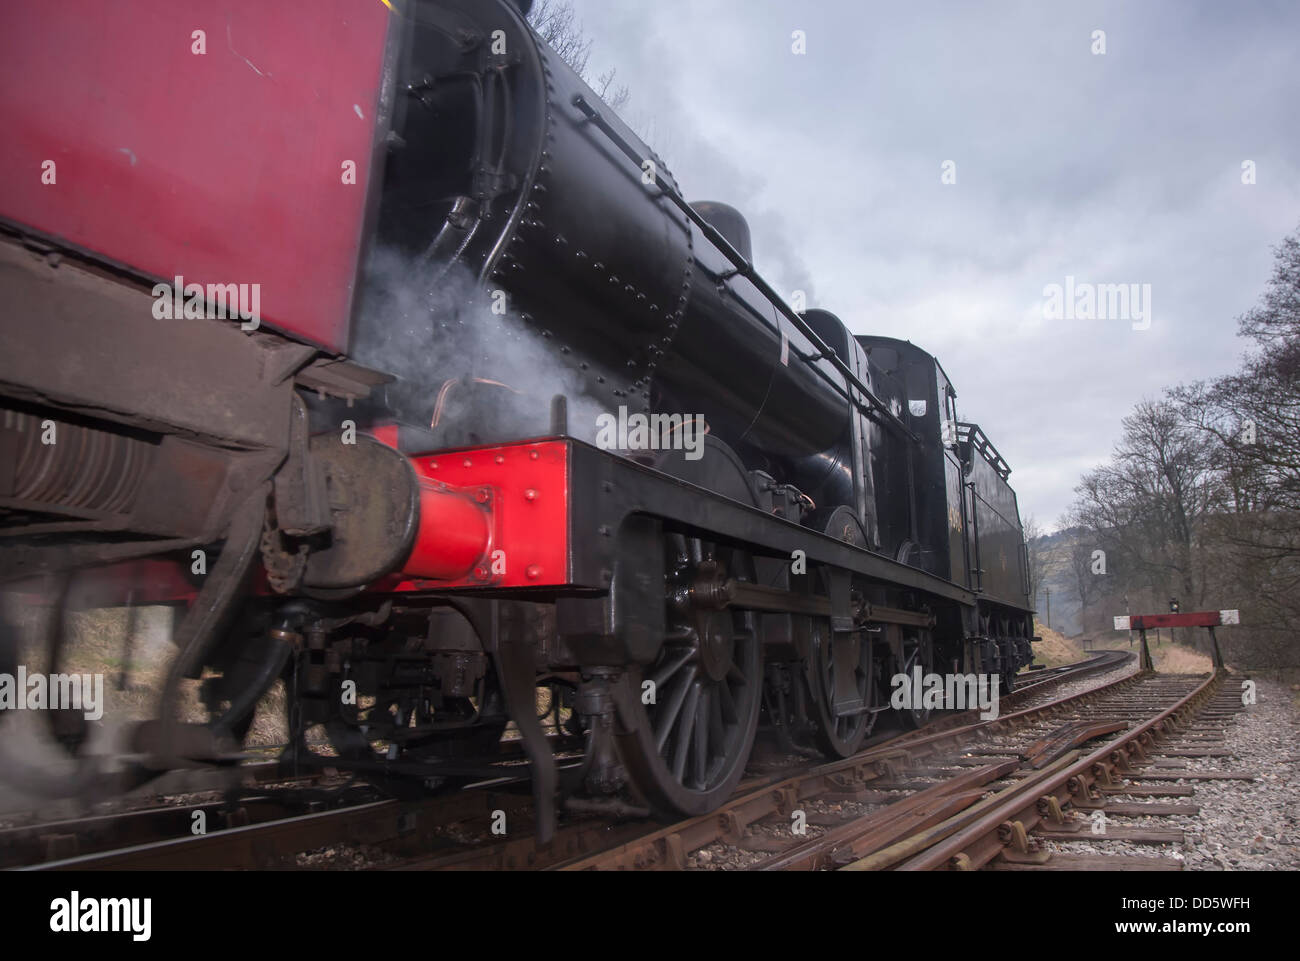 A restored steam locomotive reversing into sidings Stock Photo